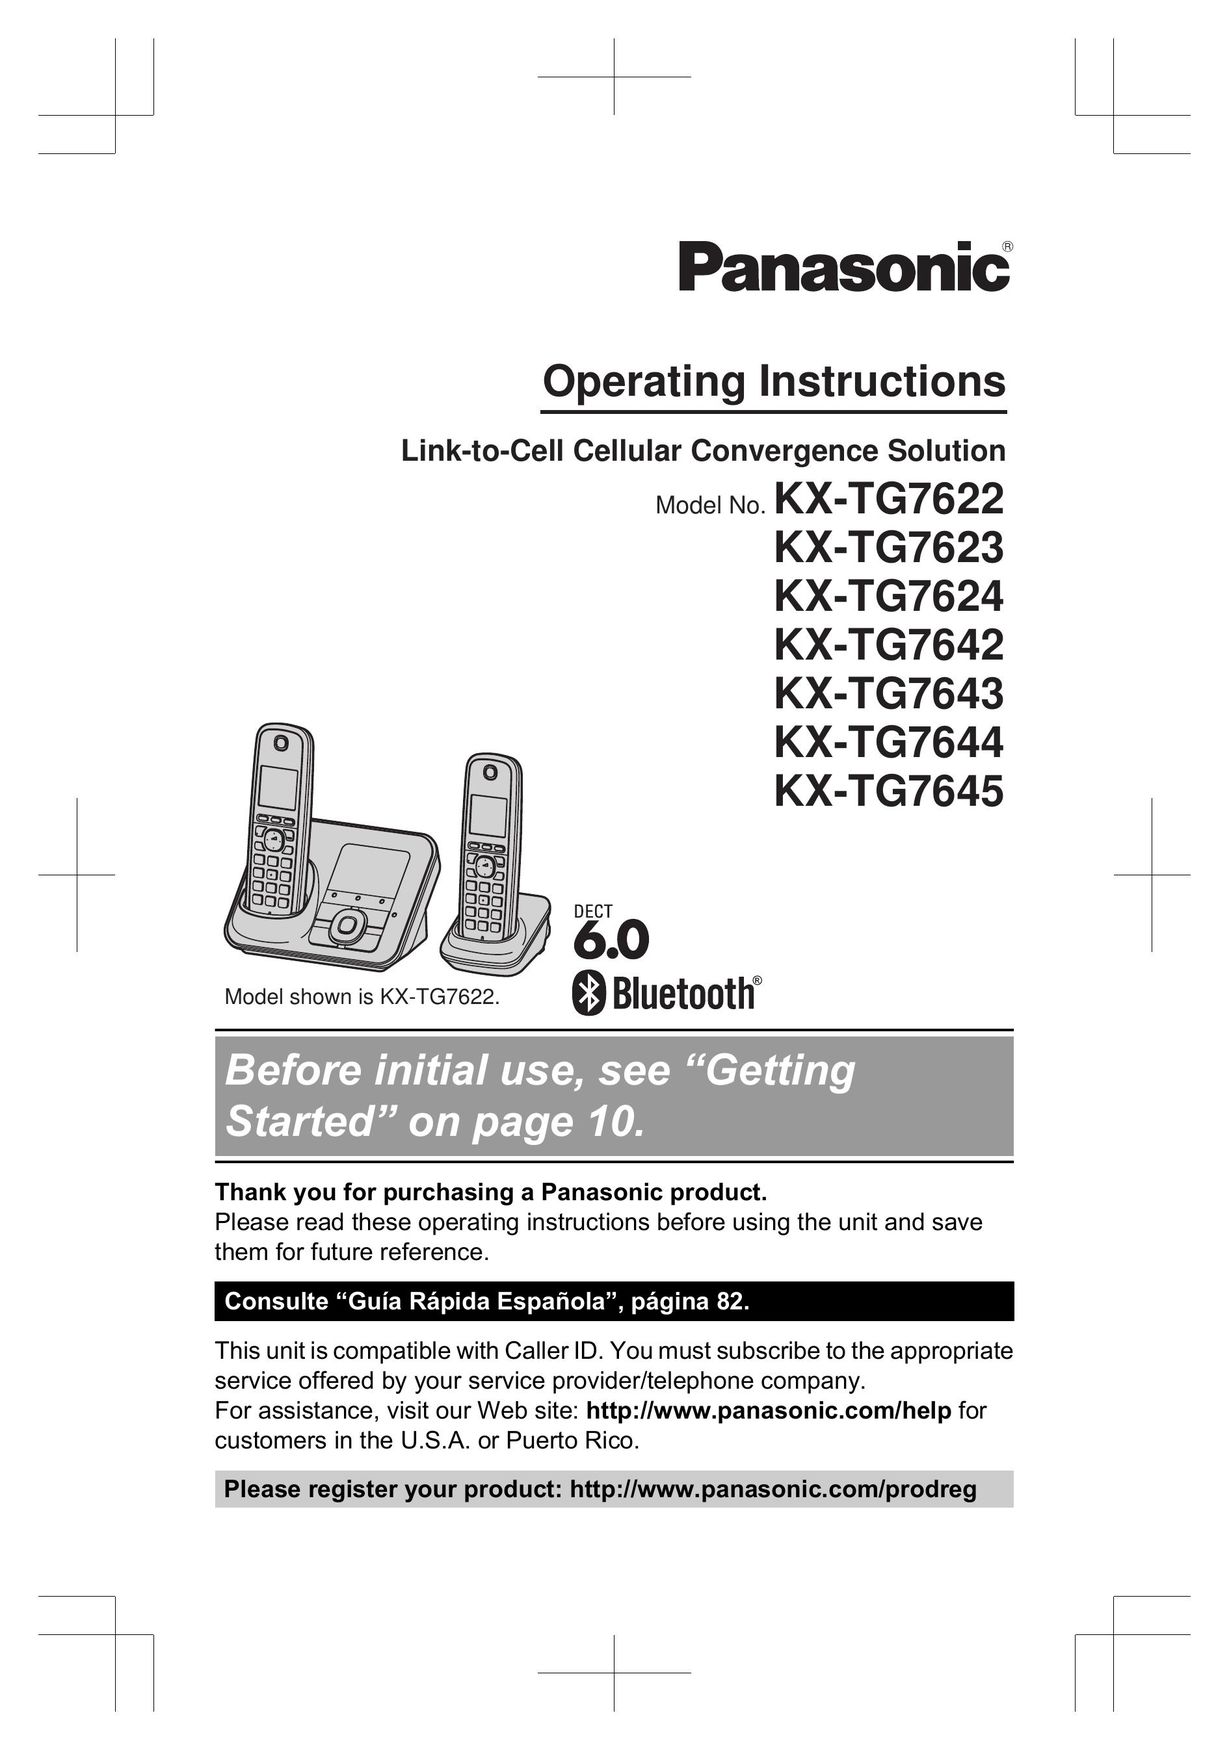 Panasonic KX-TG7642M Bluetooth Headset User Manual